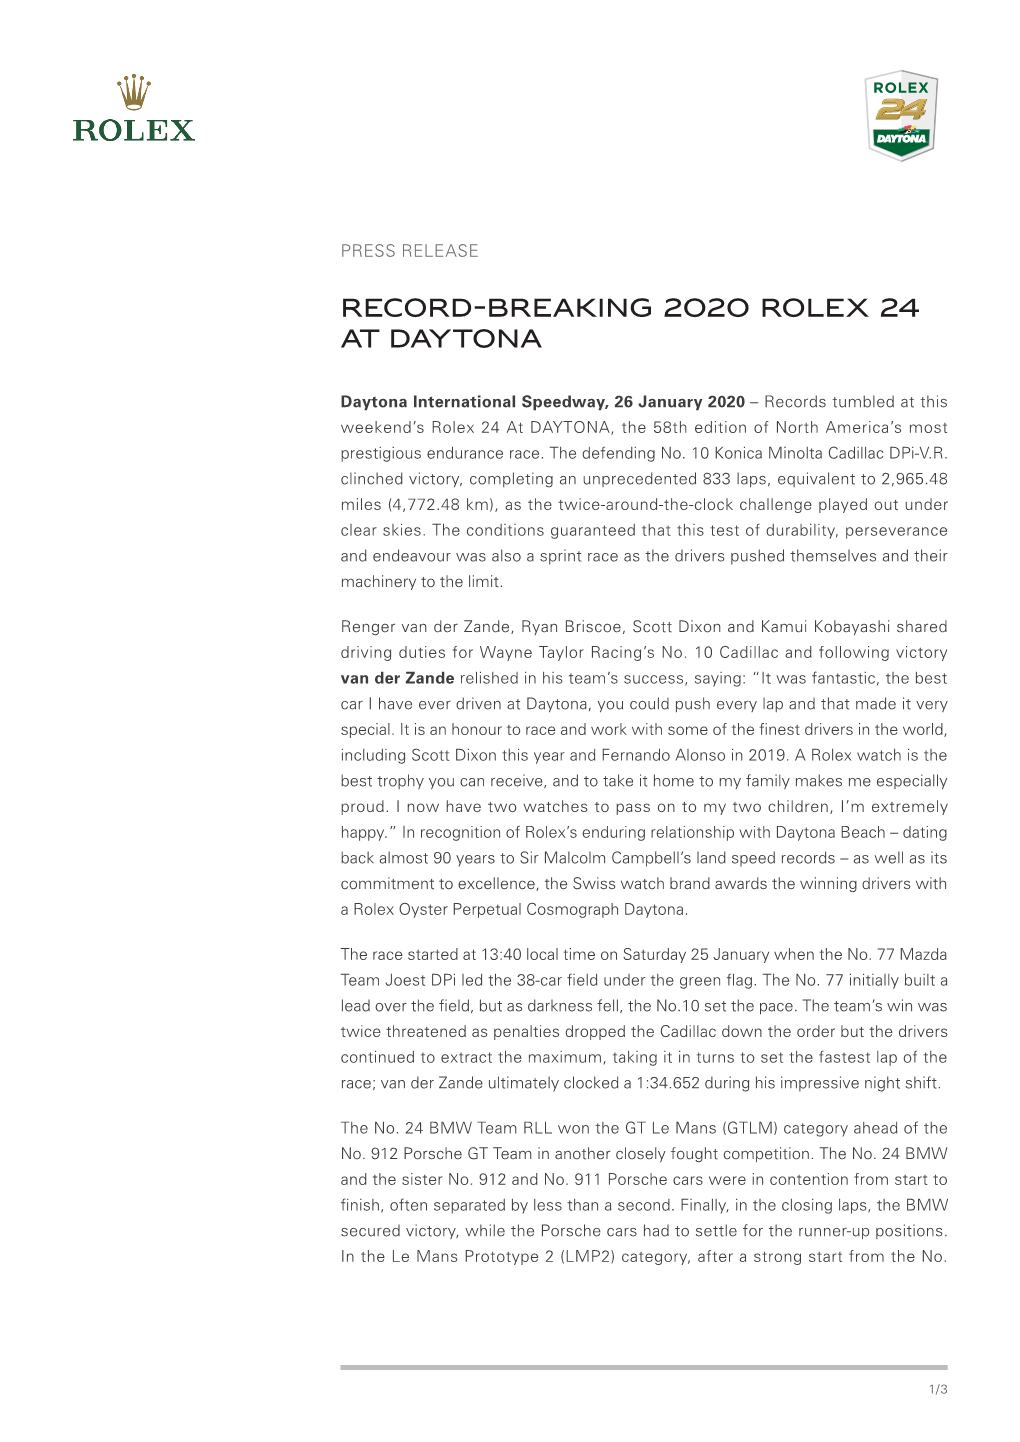 Record-Breaking 2020 Rolex 24 at Daytona